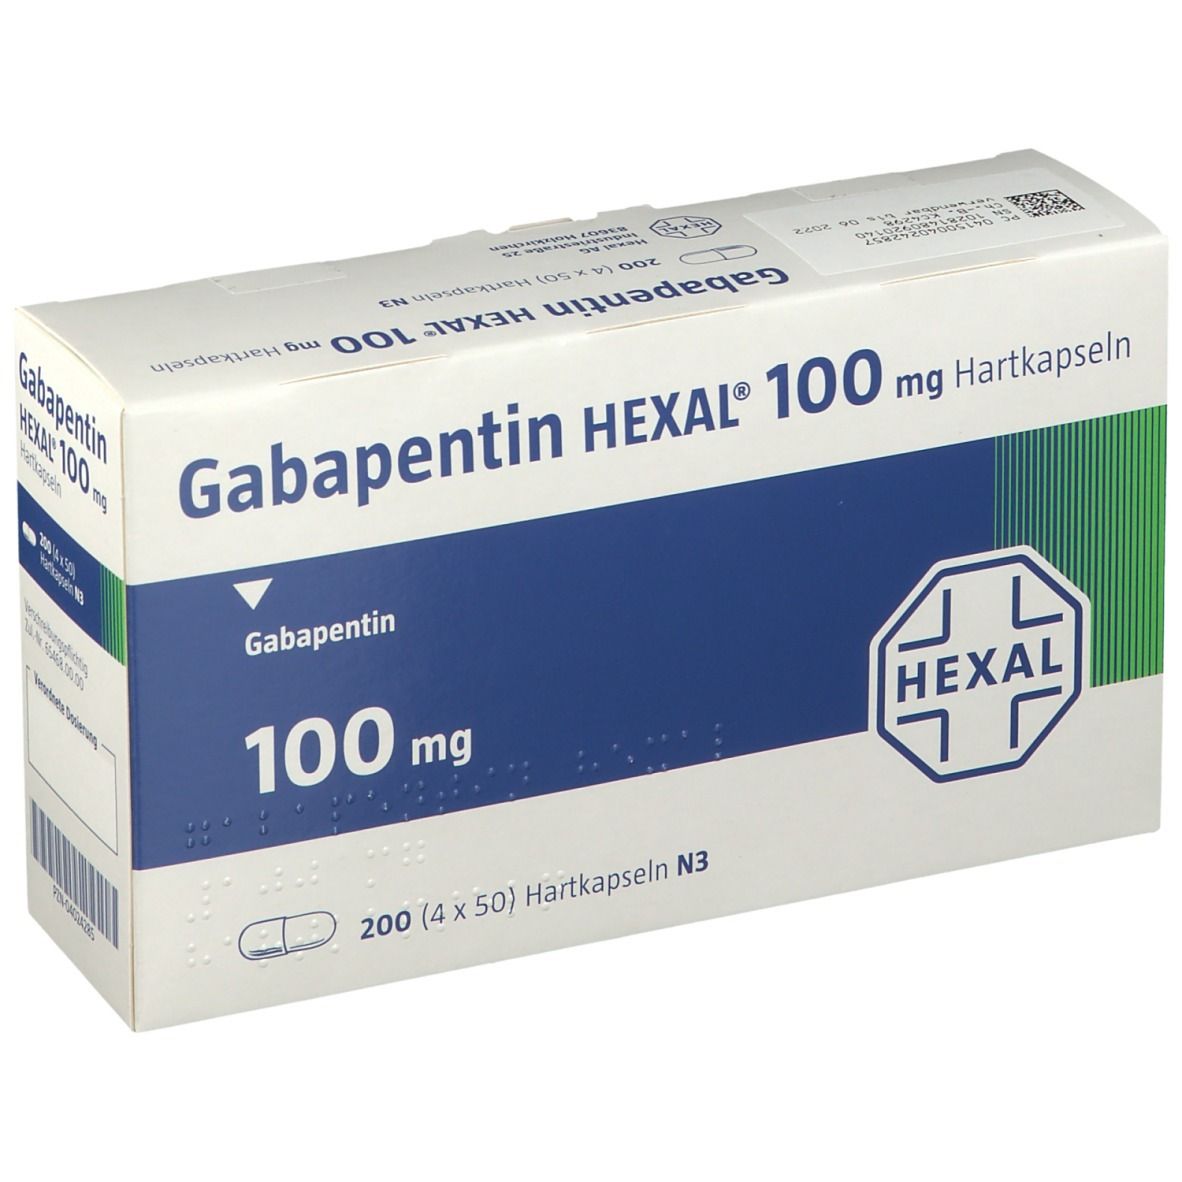 Gabapentin HEXAL® 100 mg